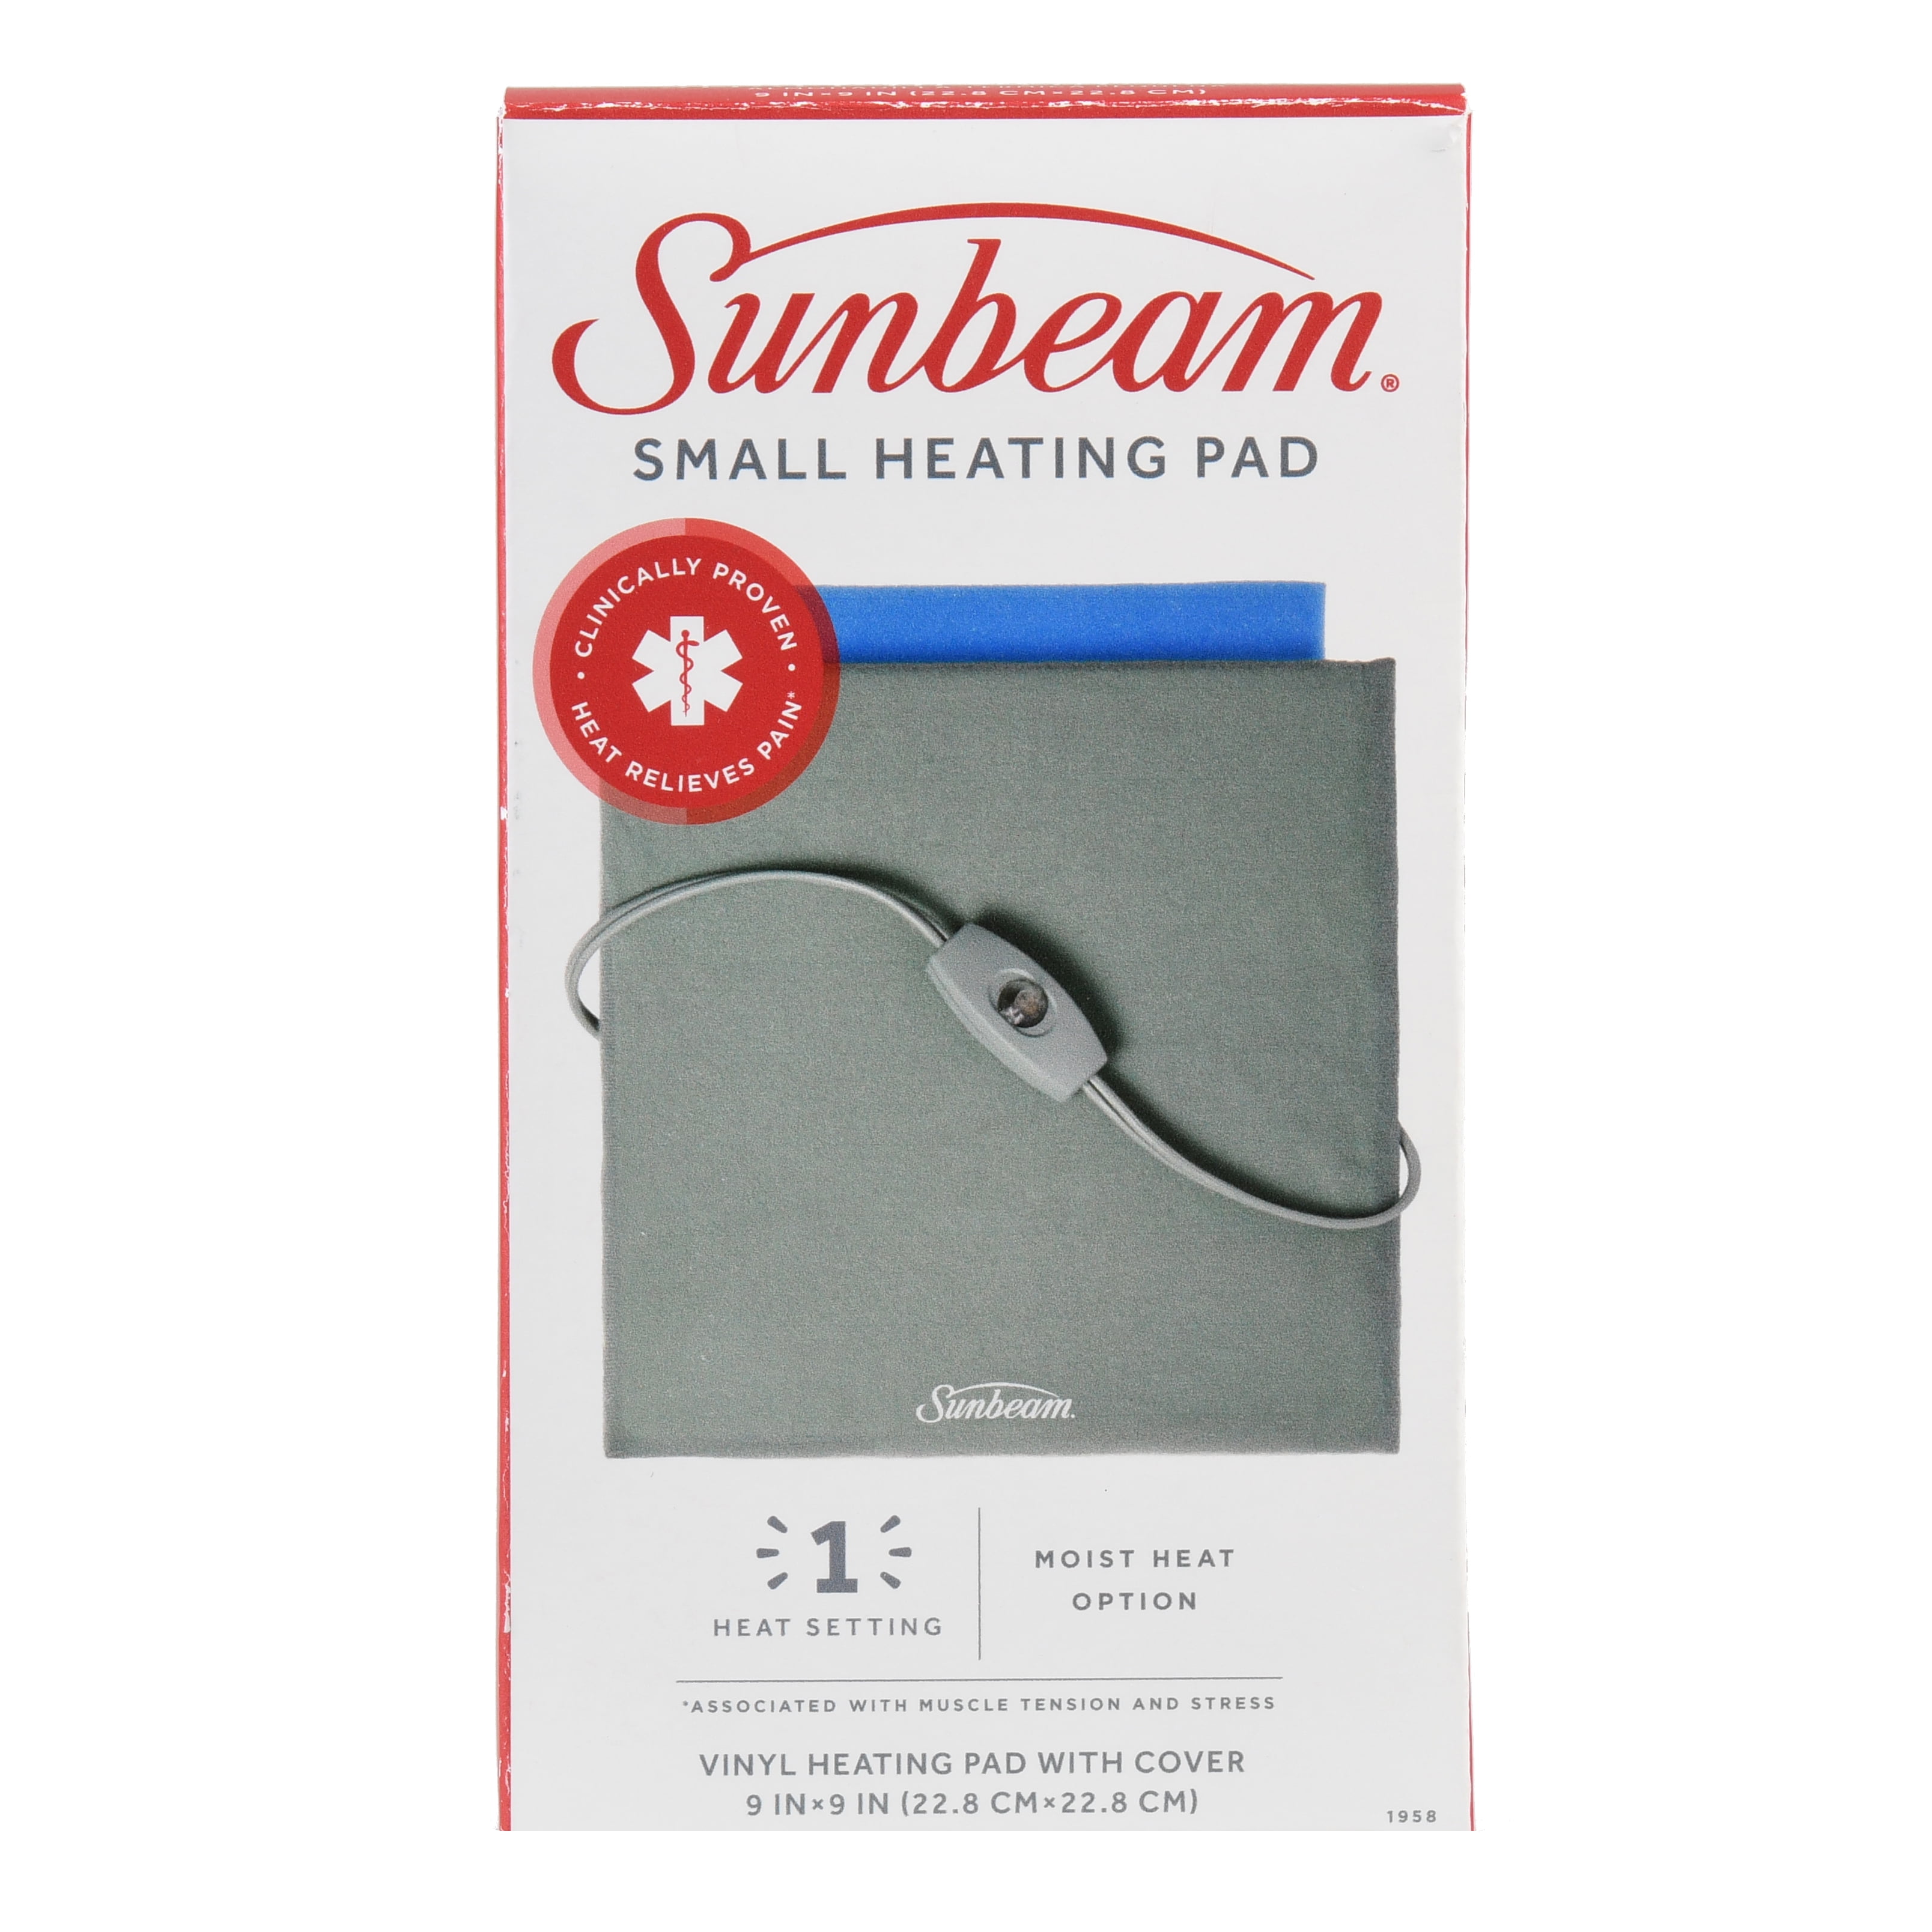 Sunbeam Small Basic Heating Pad - Walmart.com - Walmart.com